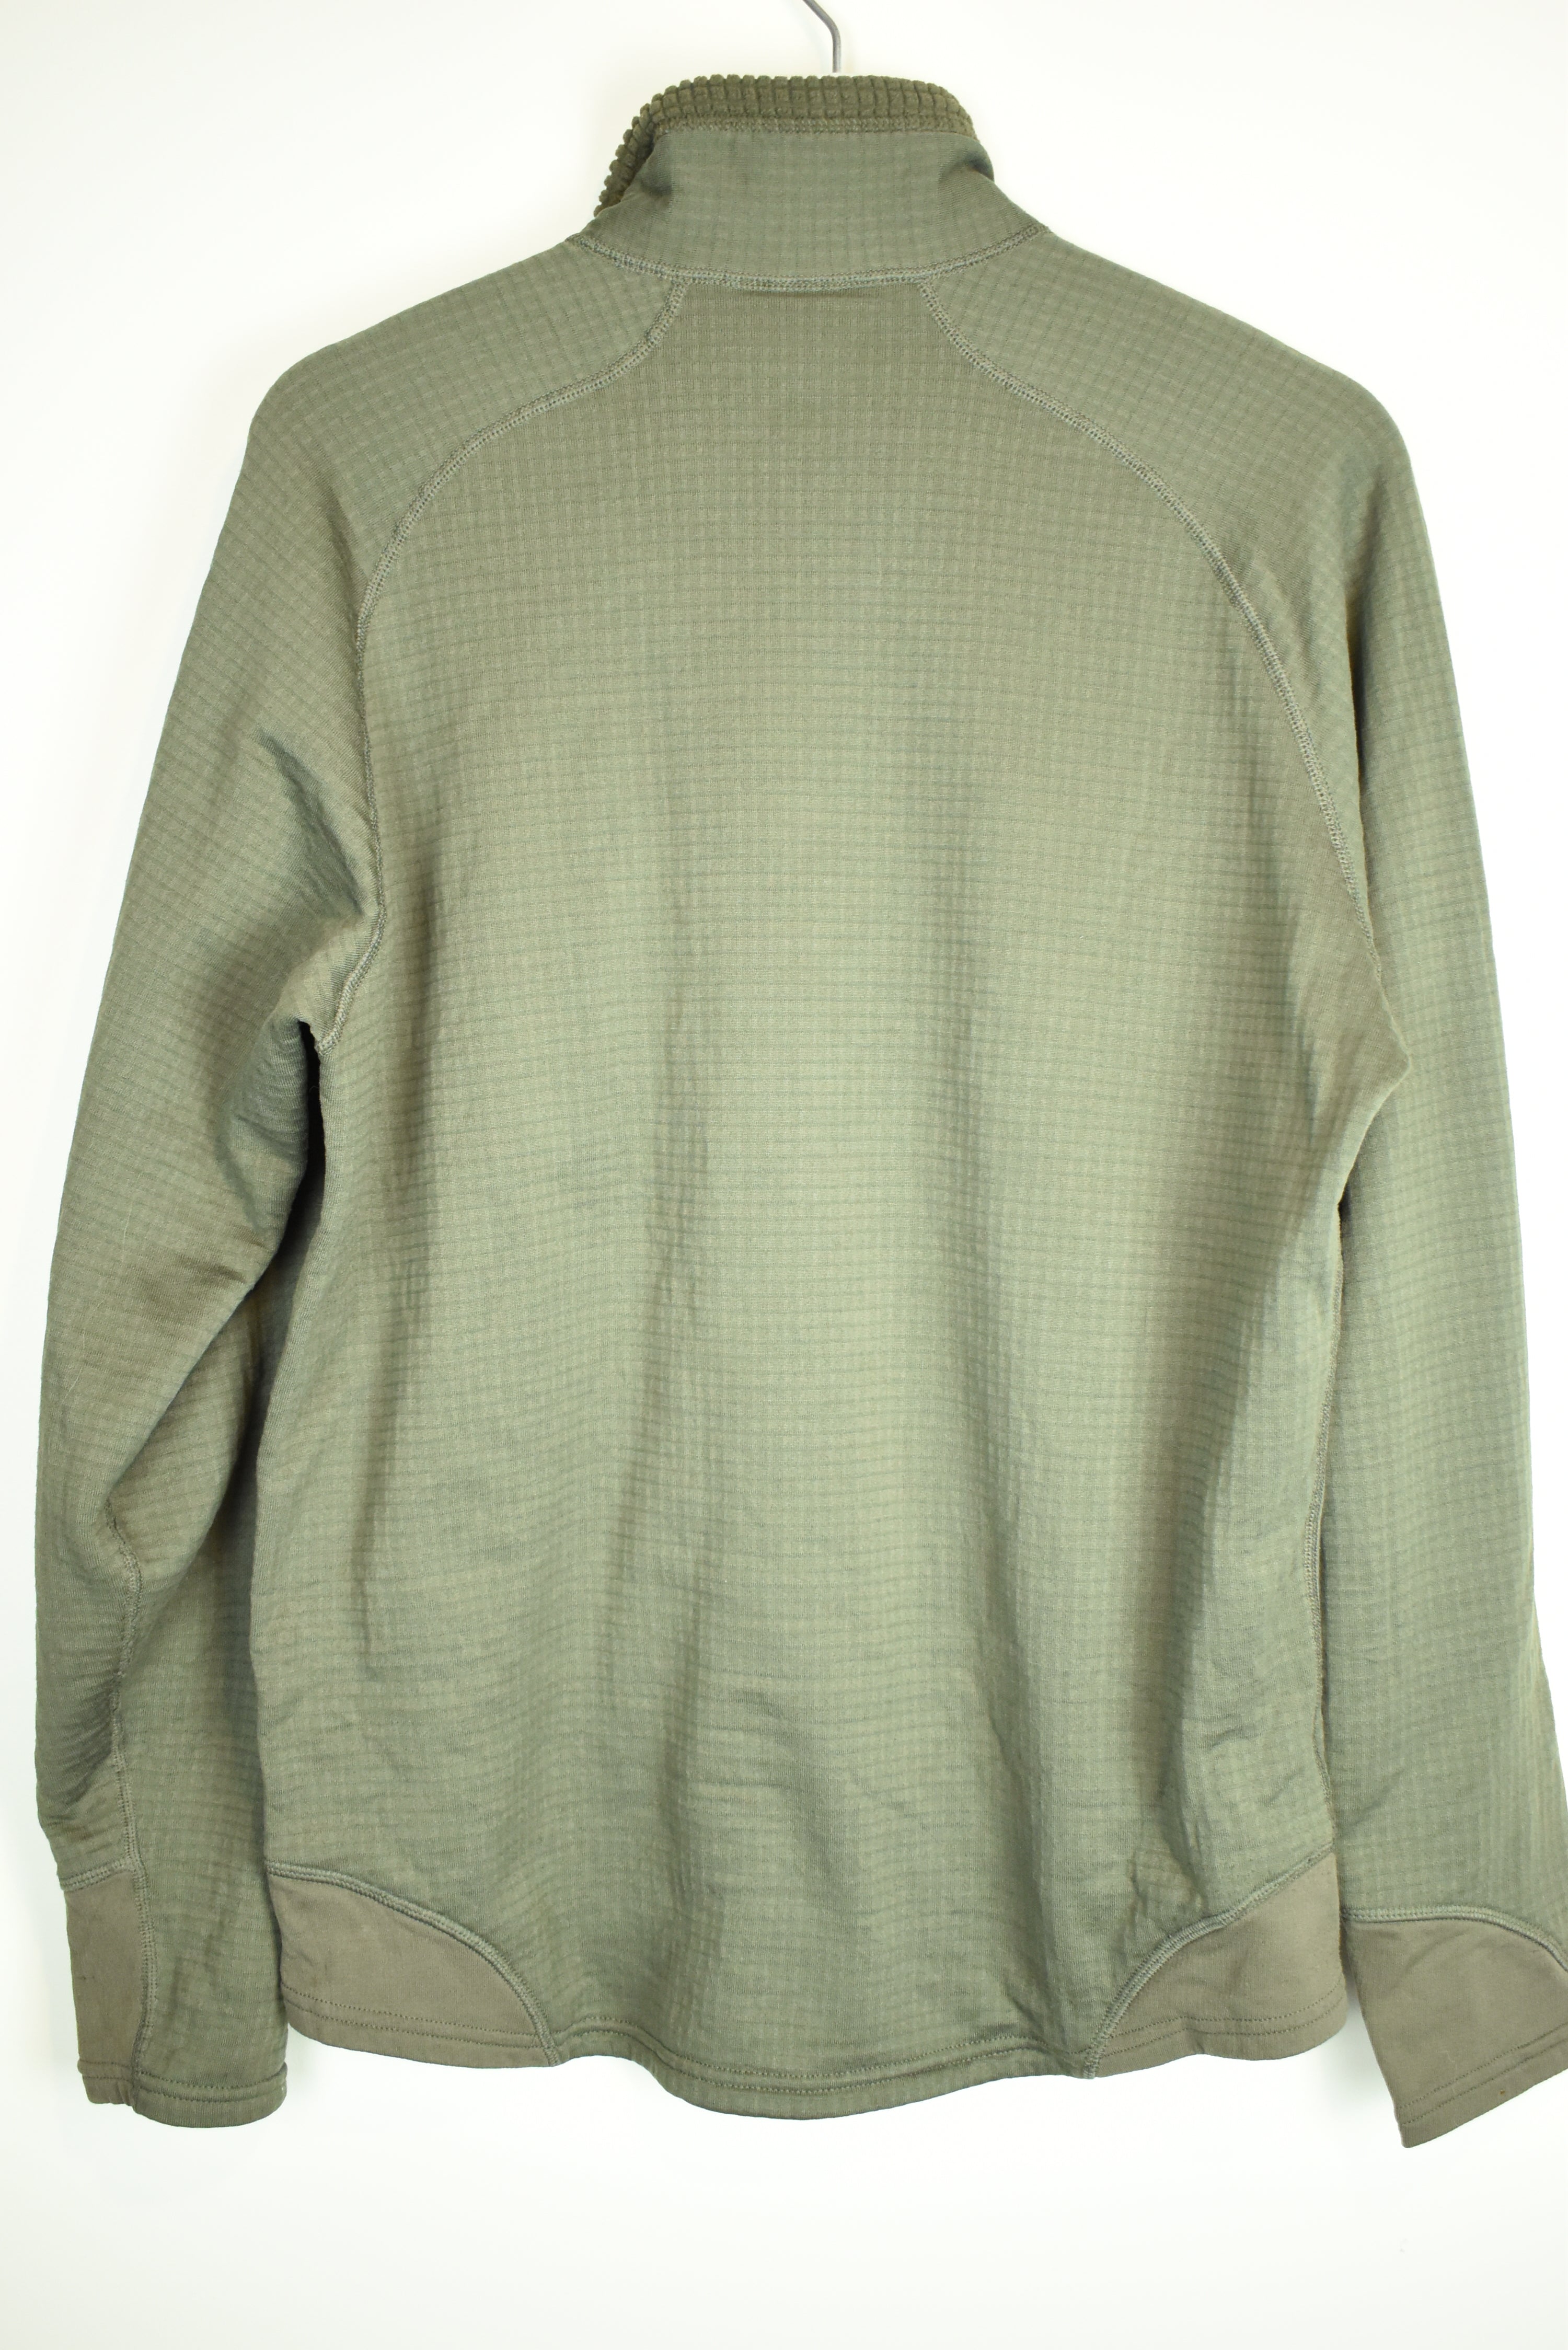 Vintage Patagonia R1 Olive Fleece Pullover Medium | Vintage Clothing